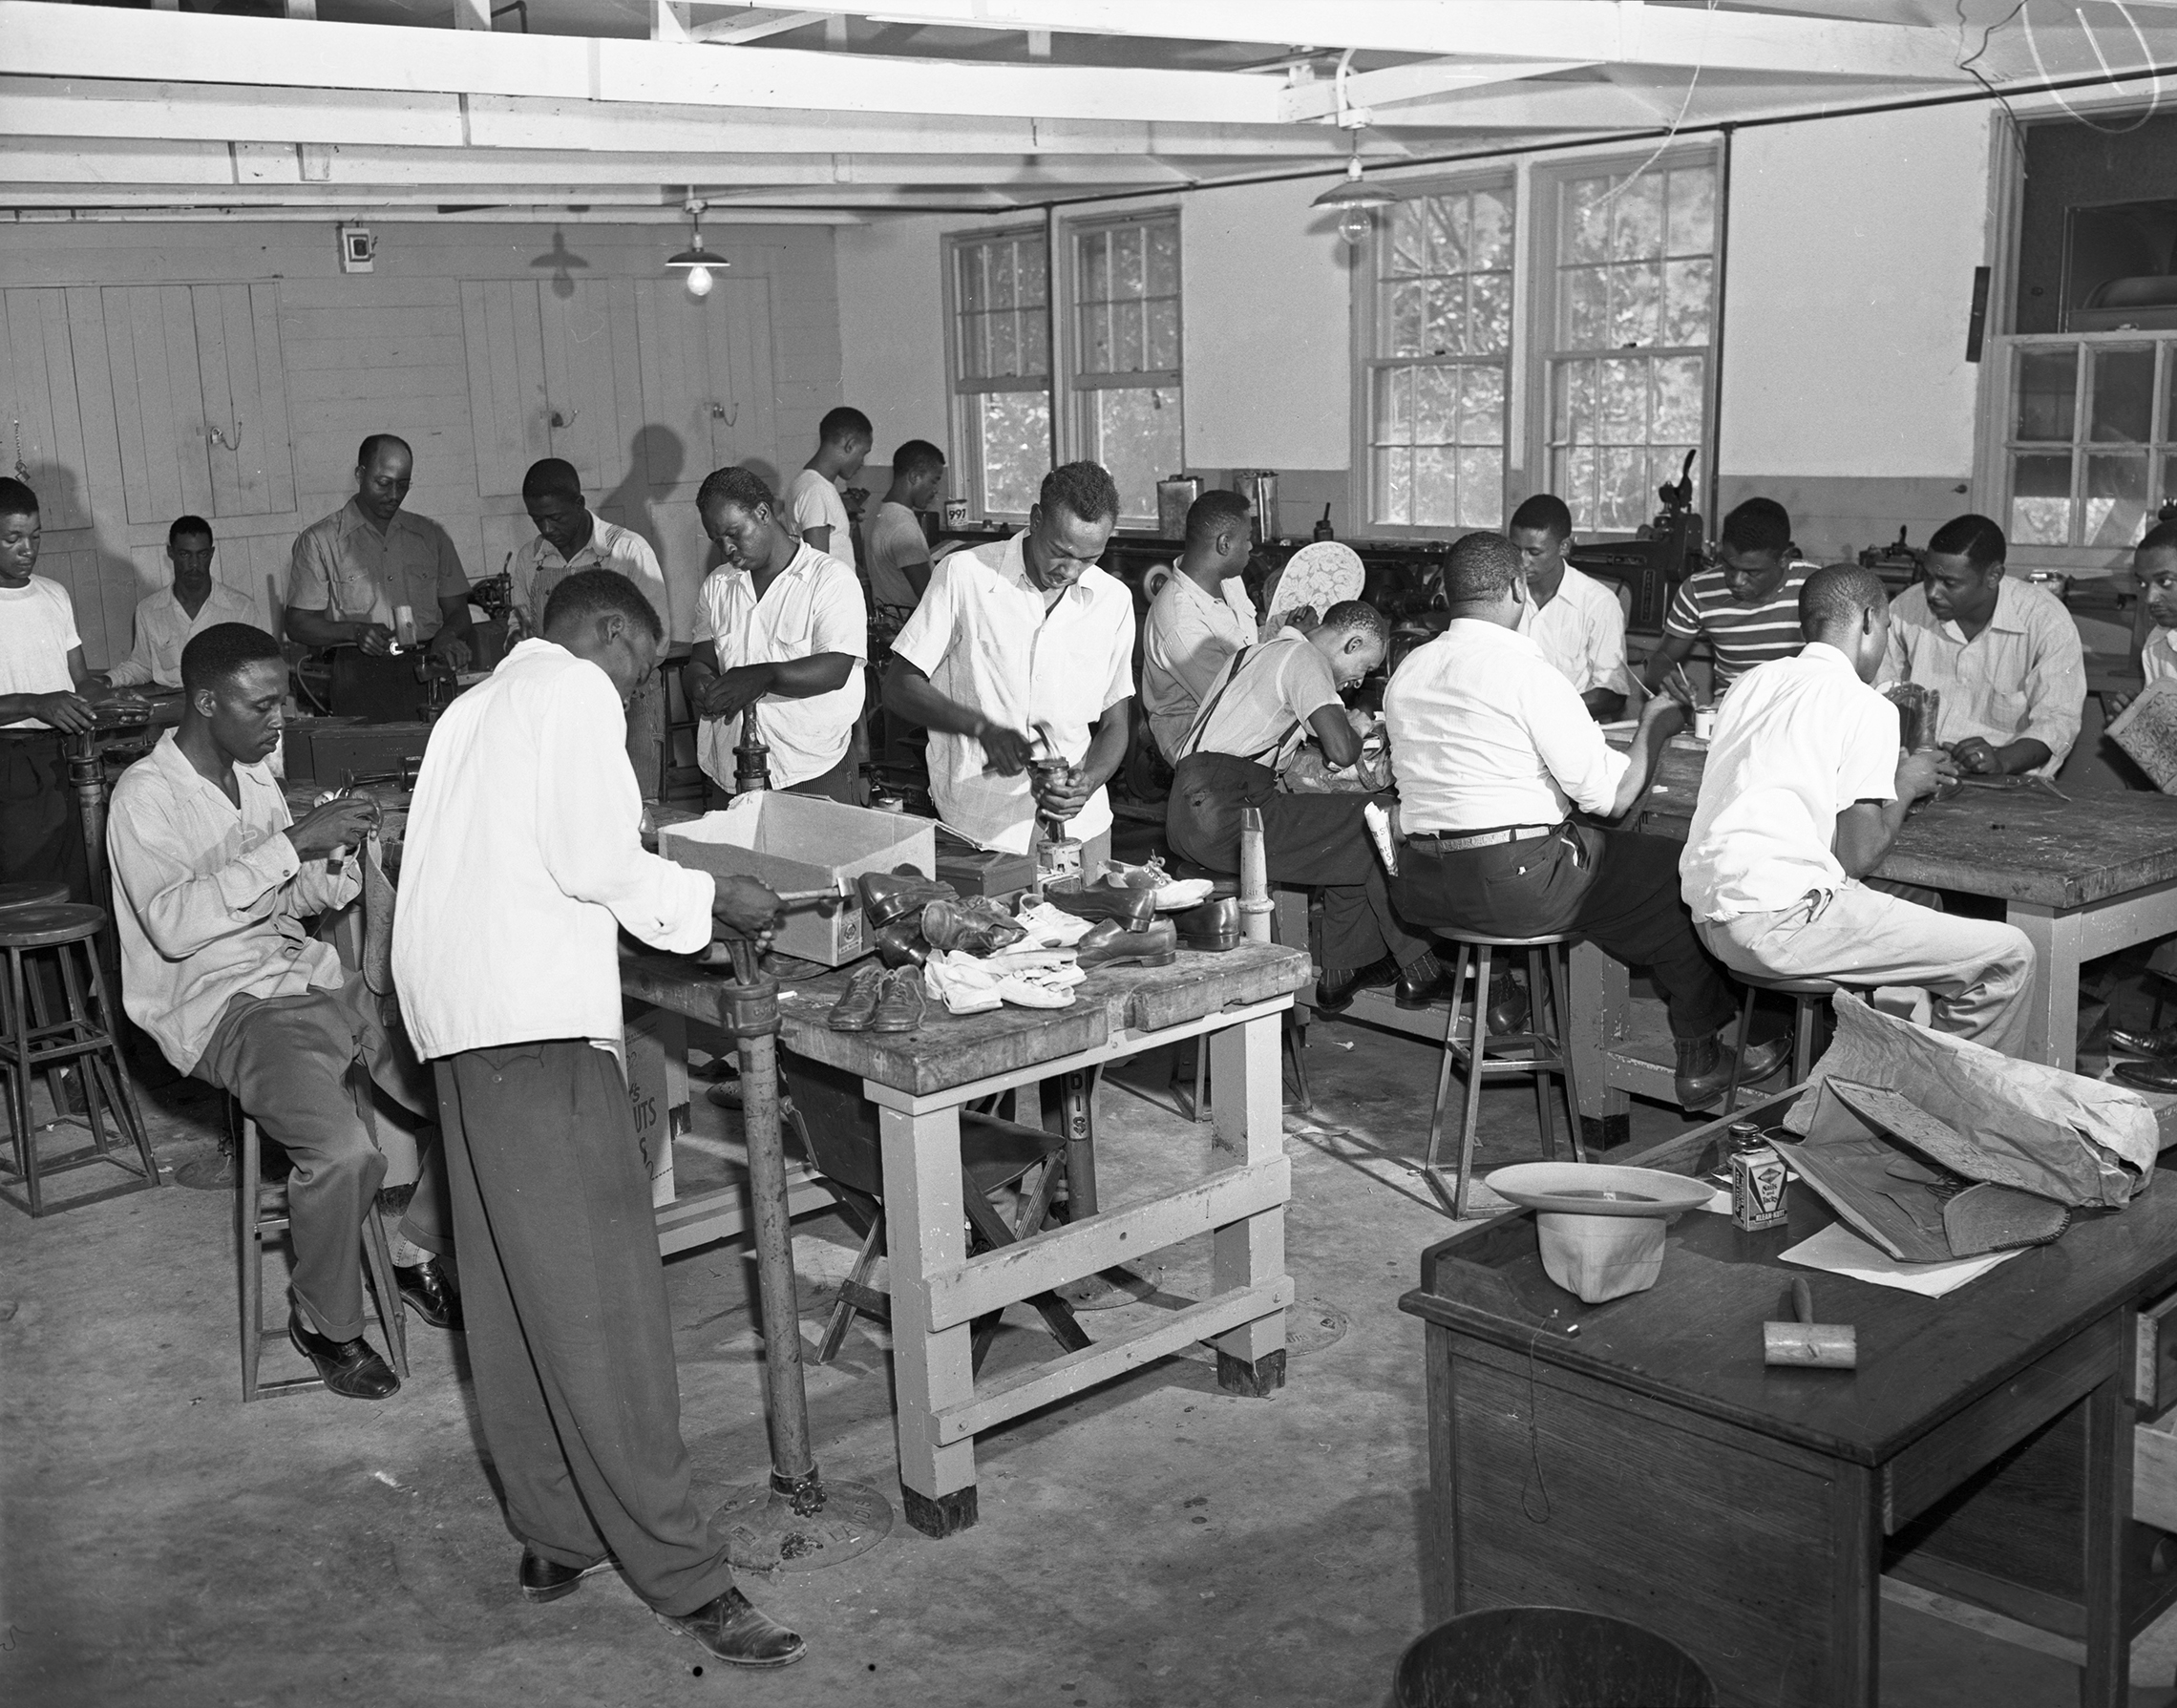 Shoe repair class at work at I. M. Terrell High School.